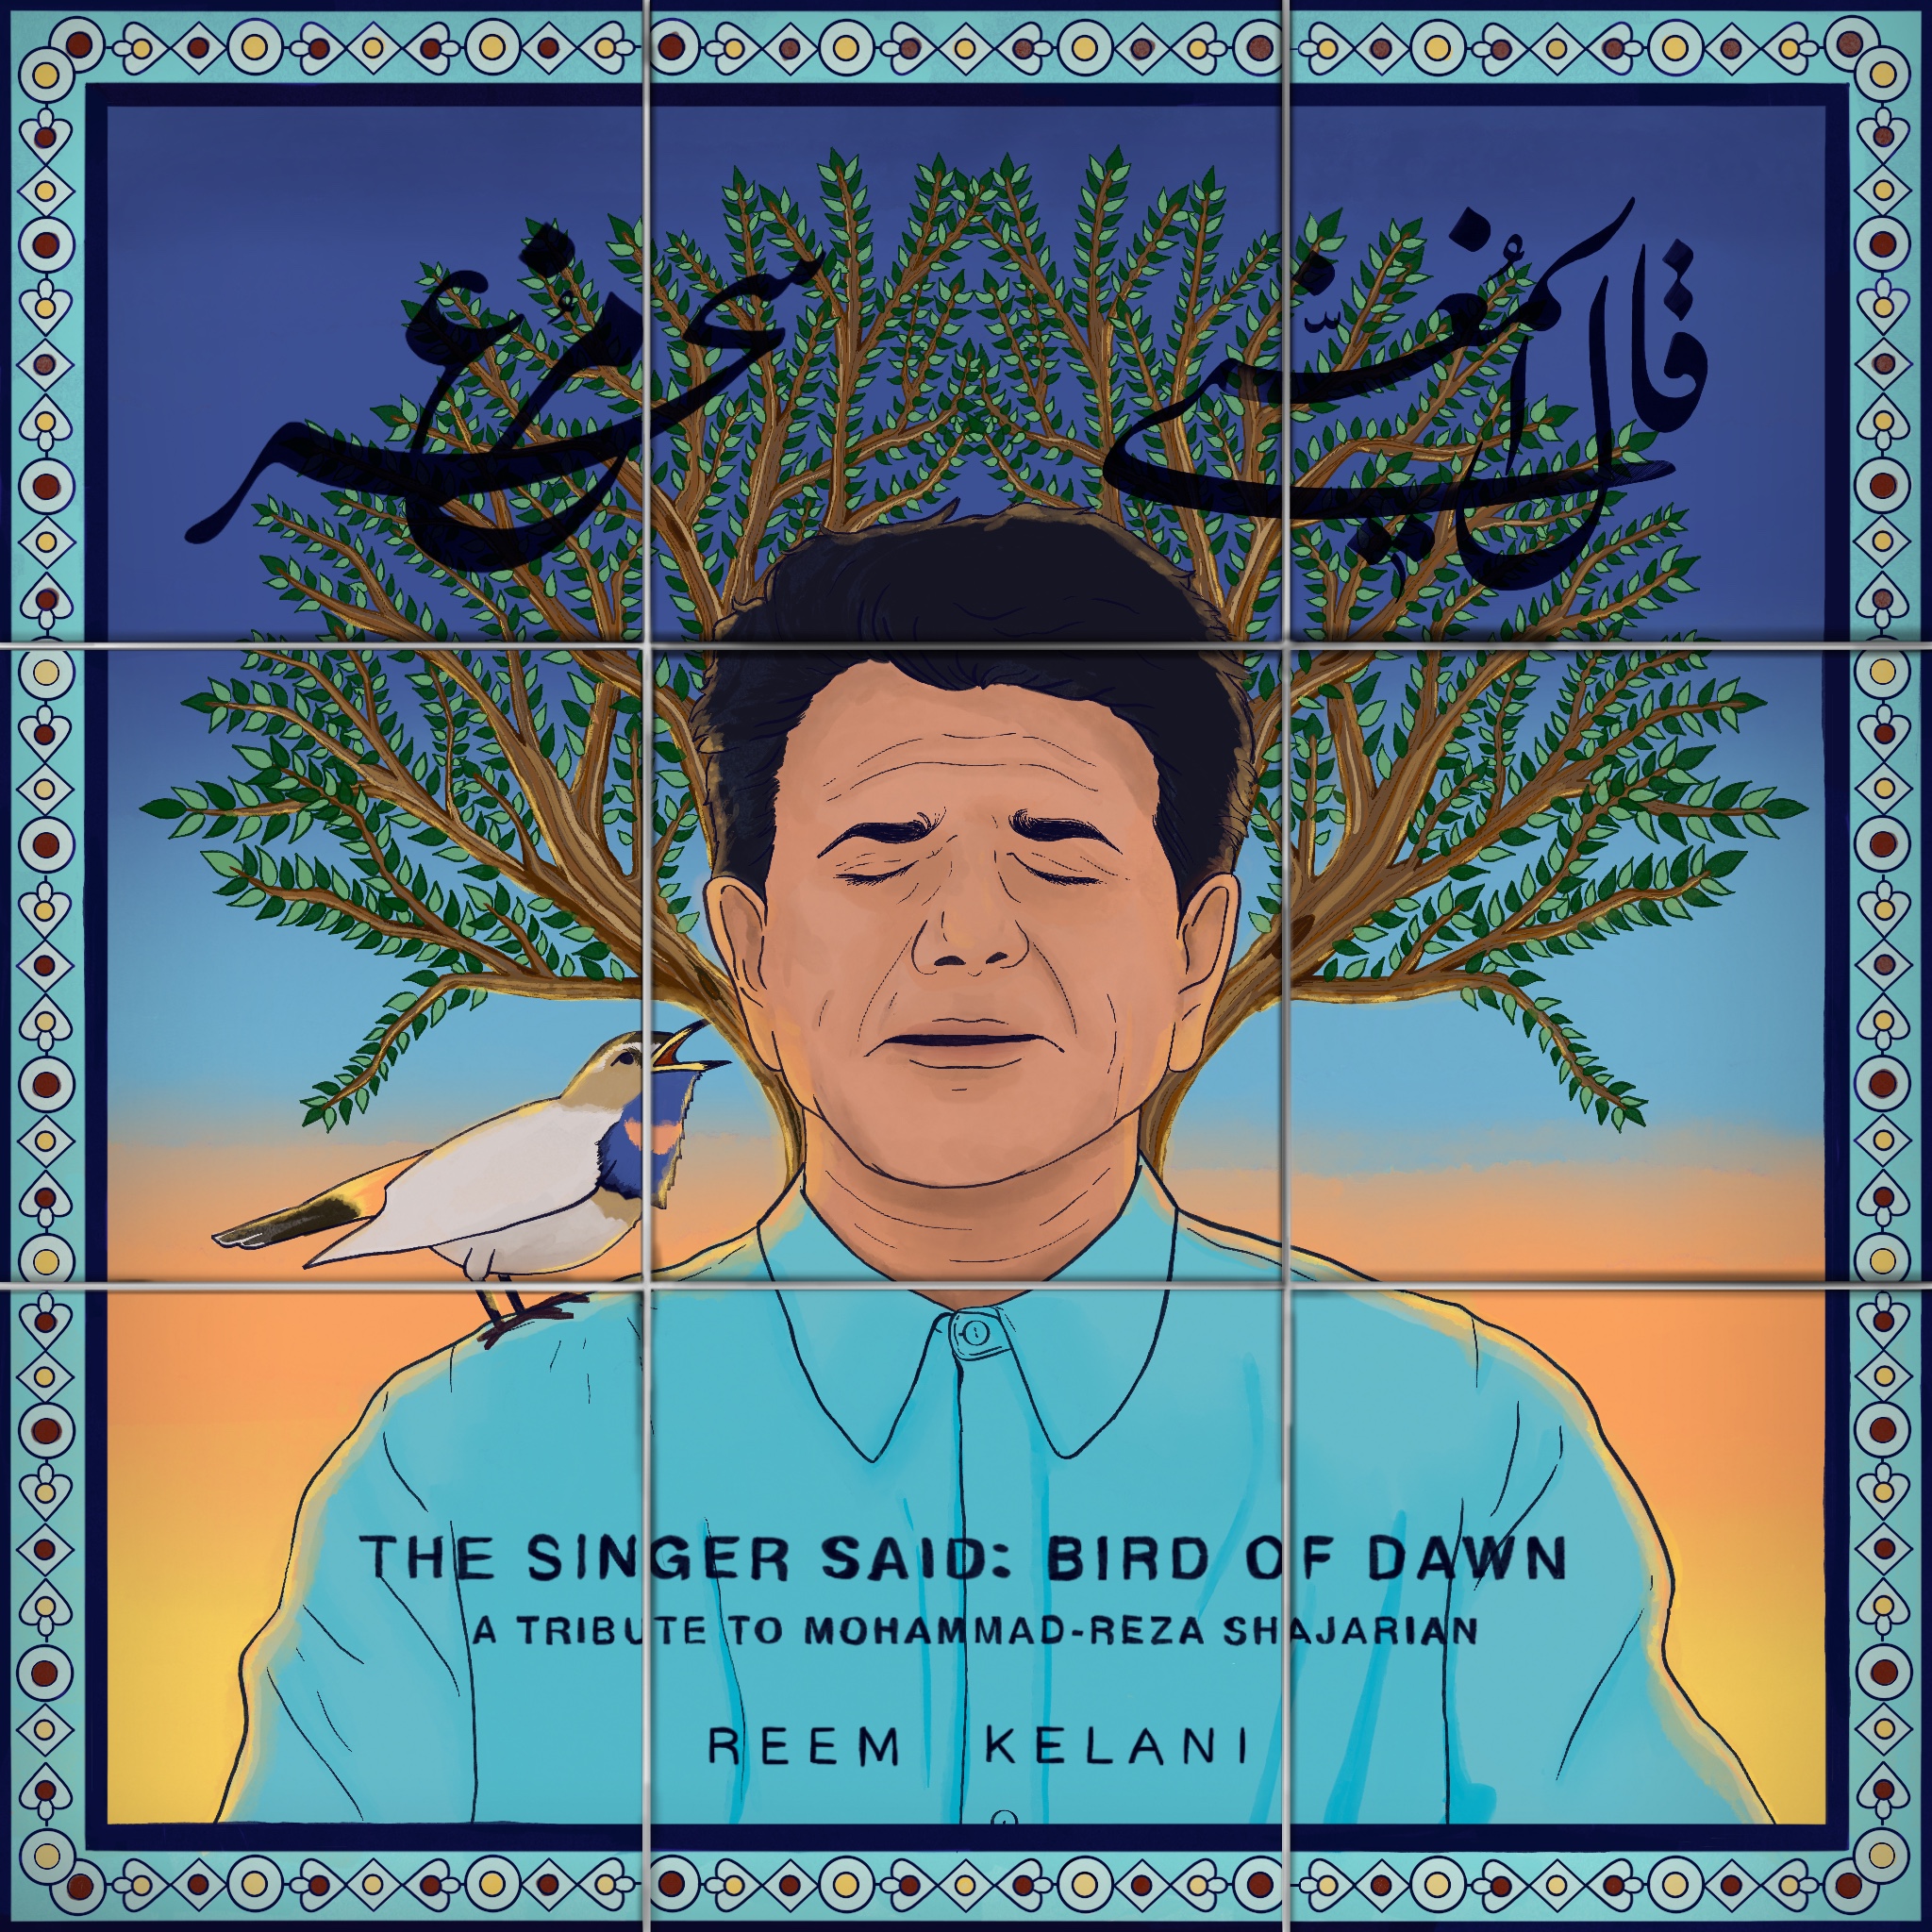 Cover von Reem Kelanis Zwei-Lied-Album "The Singer Said: Bird of Dawn" (Quelle: reemkelani.bandcamp.com)